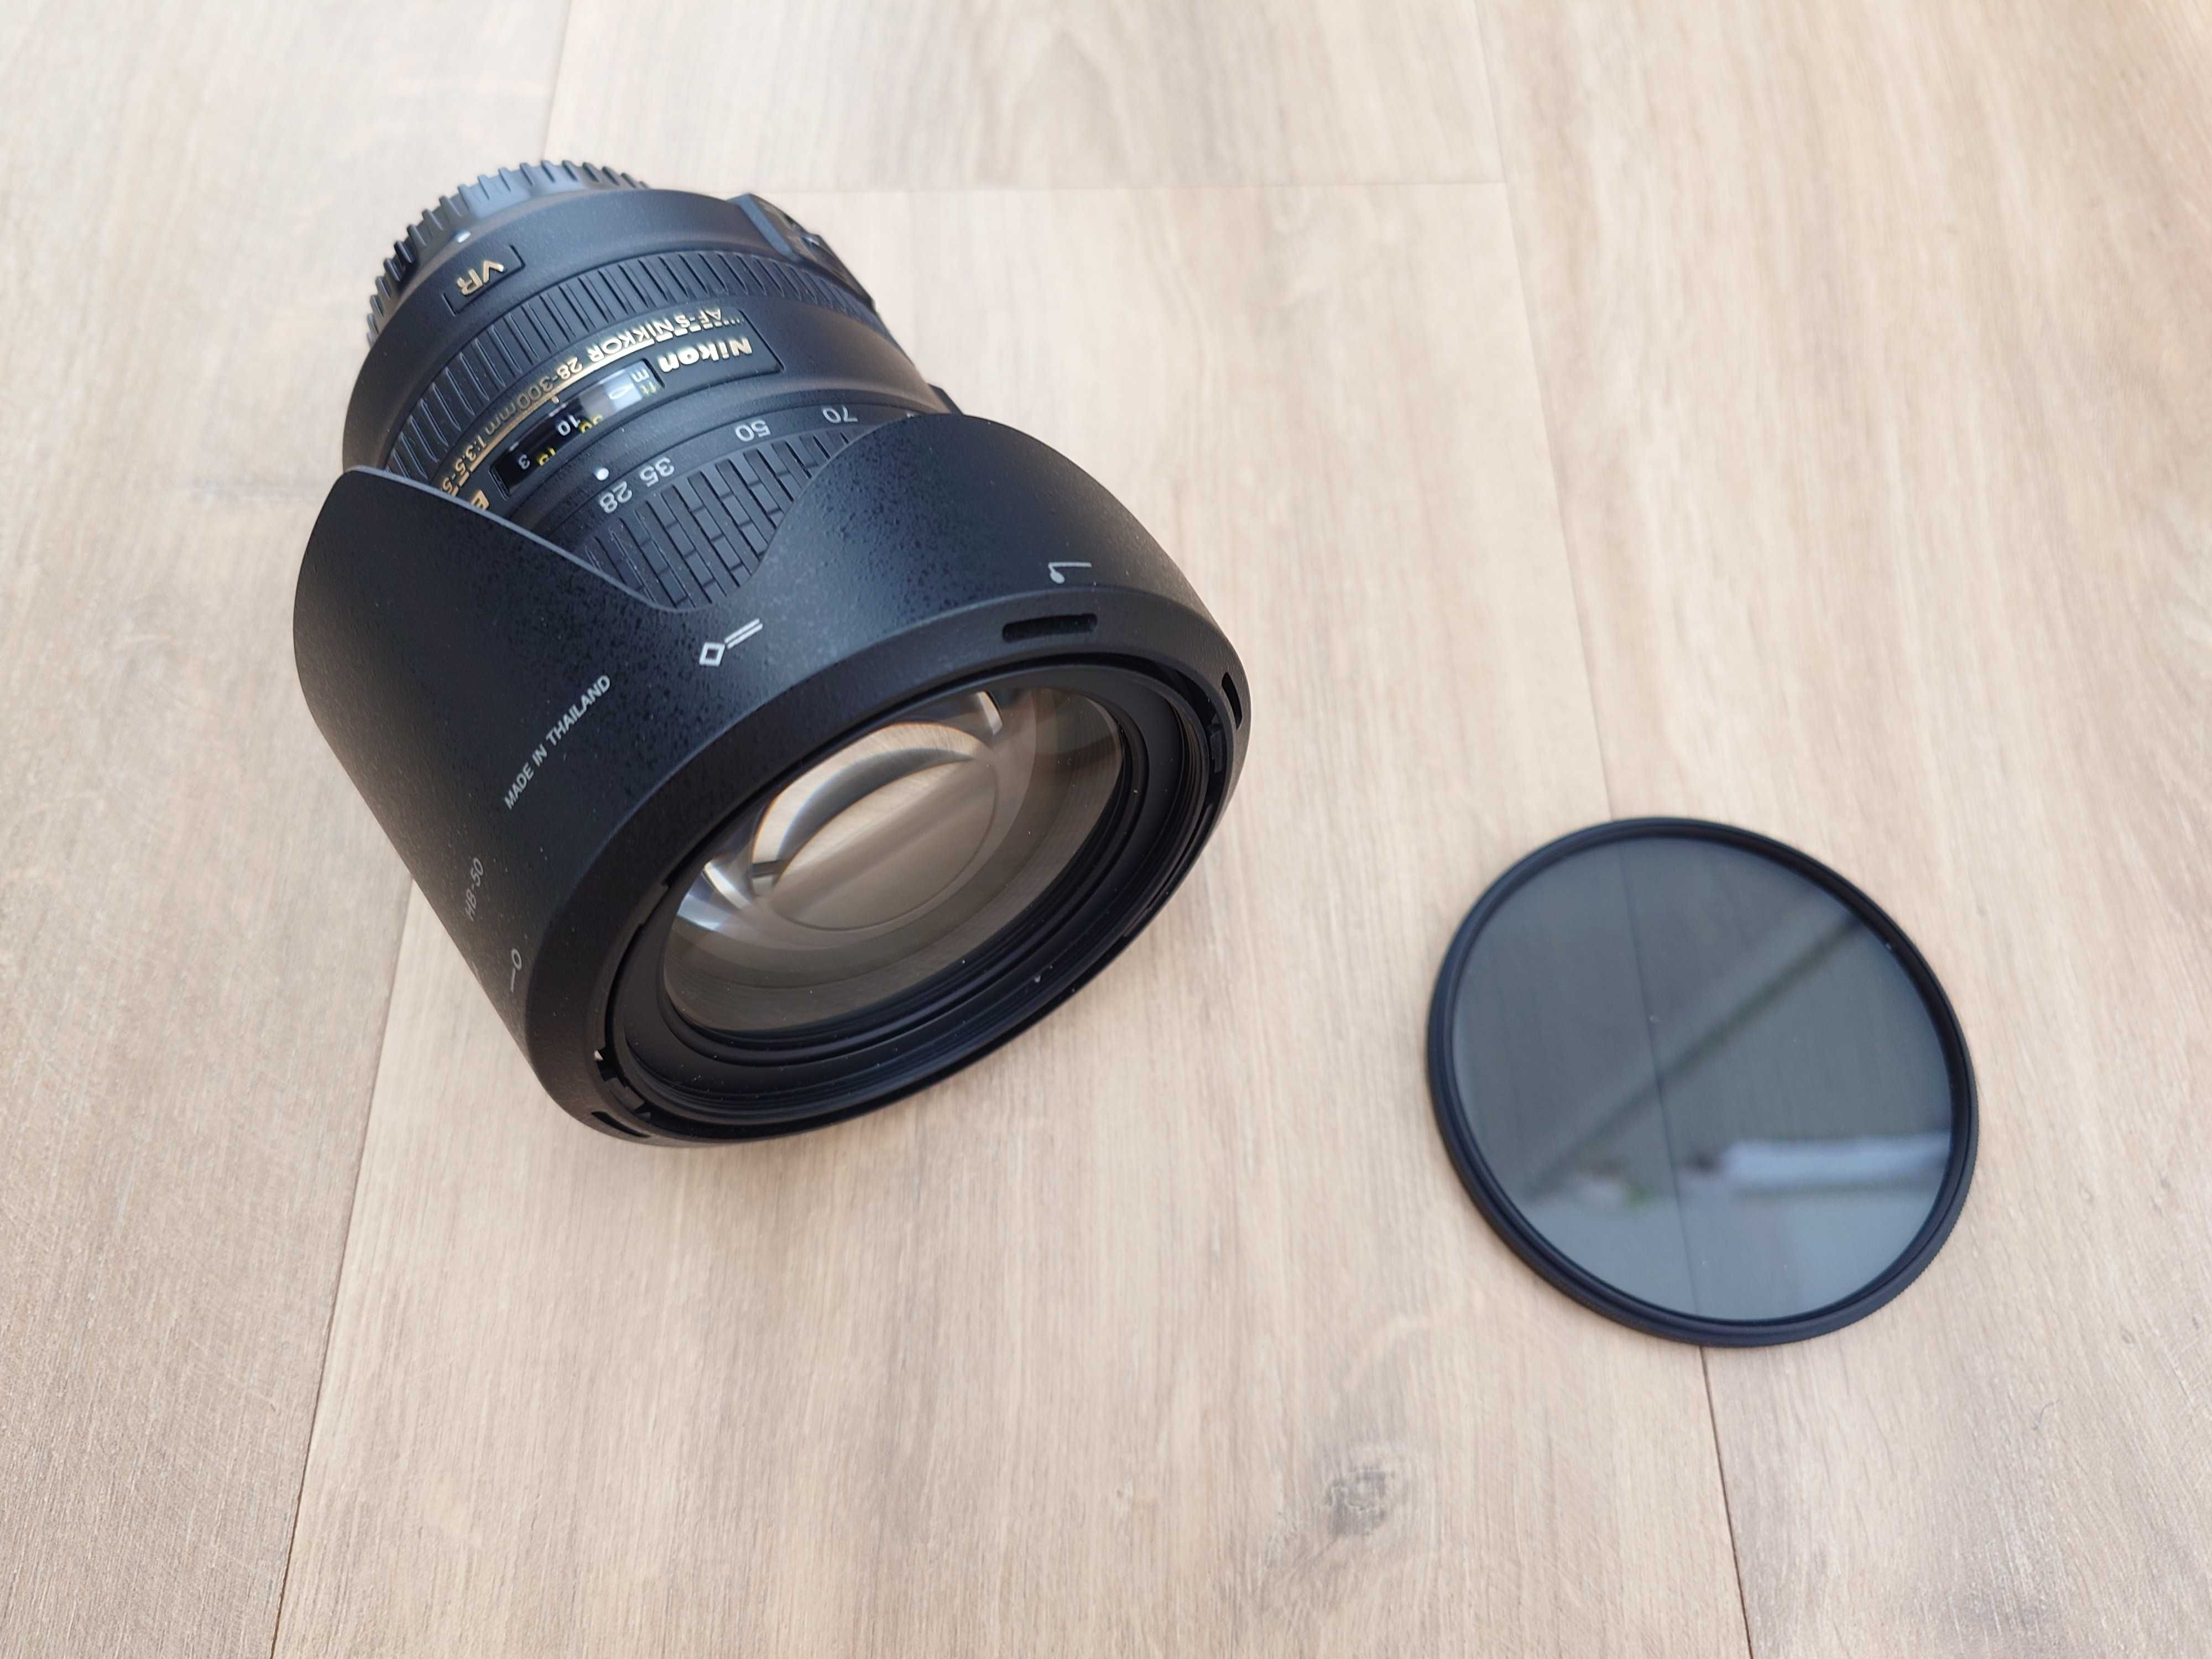 Obiectiv Nikkor 28-300 si filtru de polarizare circulara Hoya 77mm